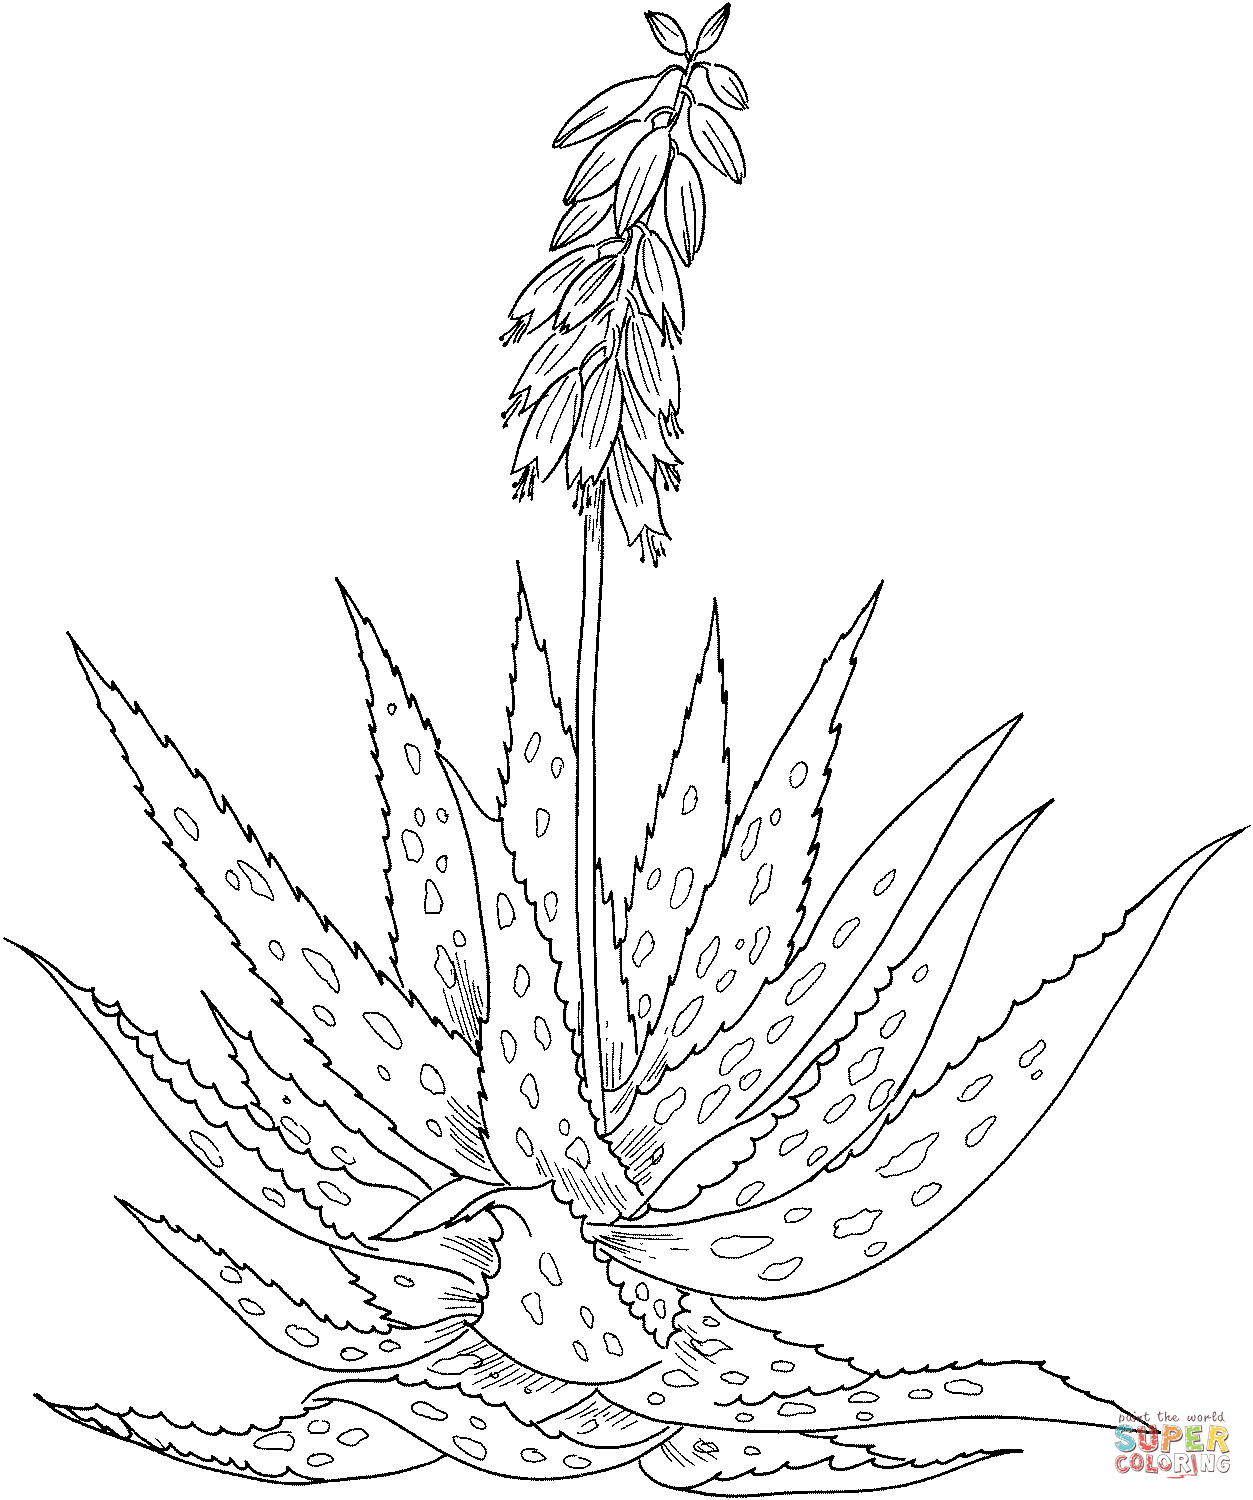 Aloe vera d'Aloès